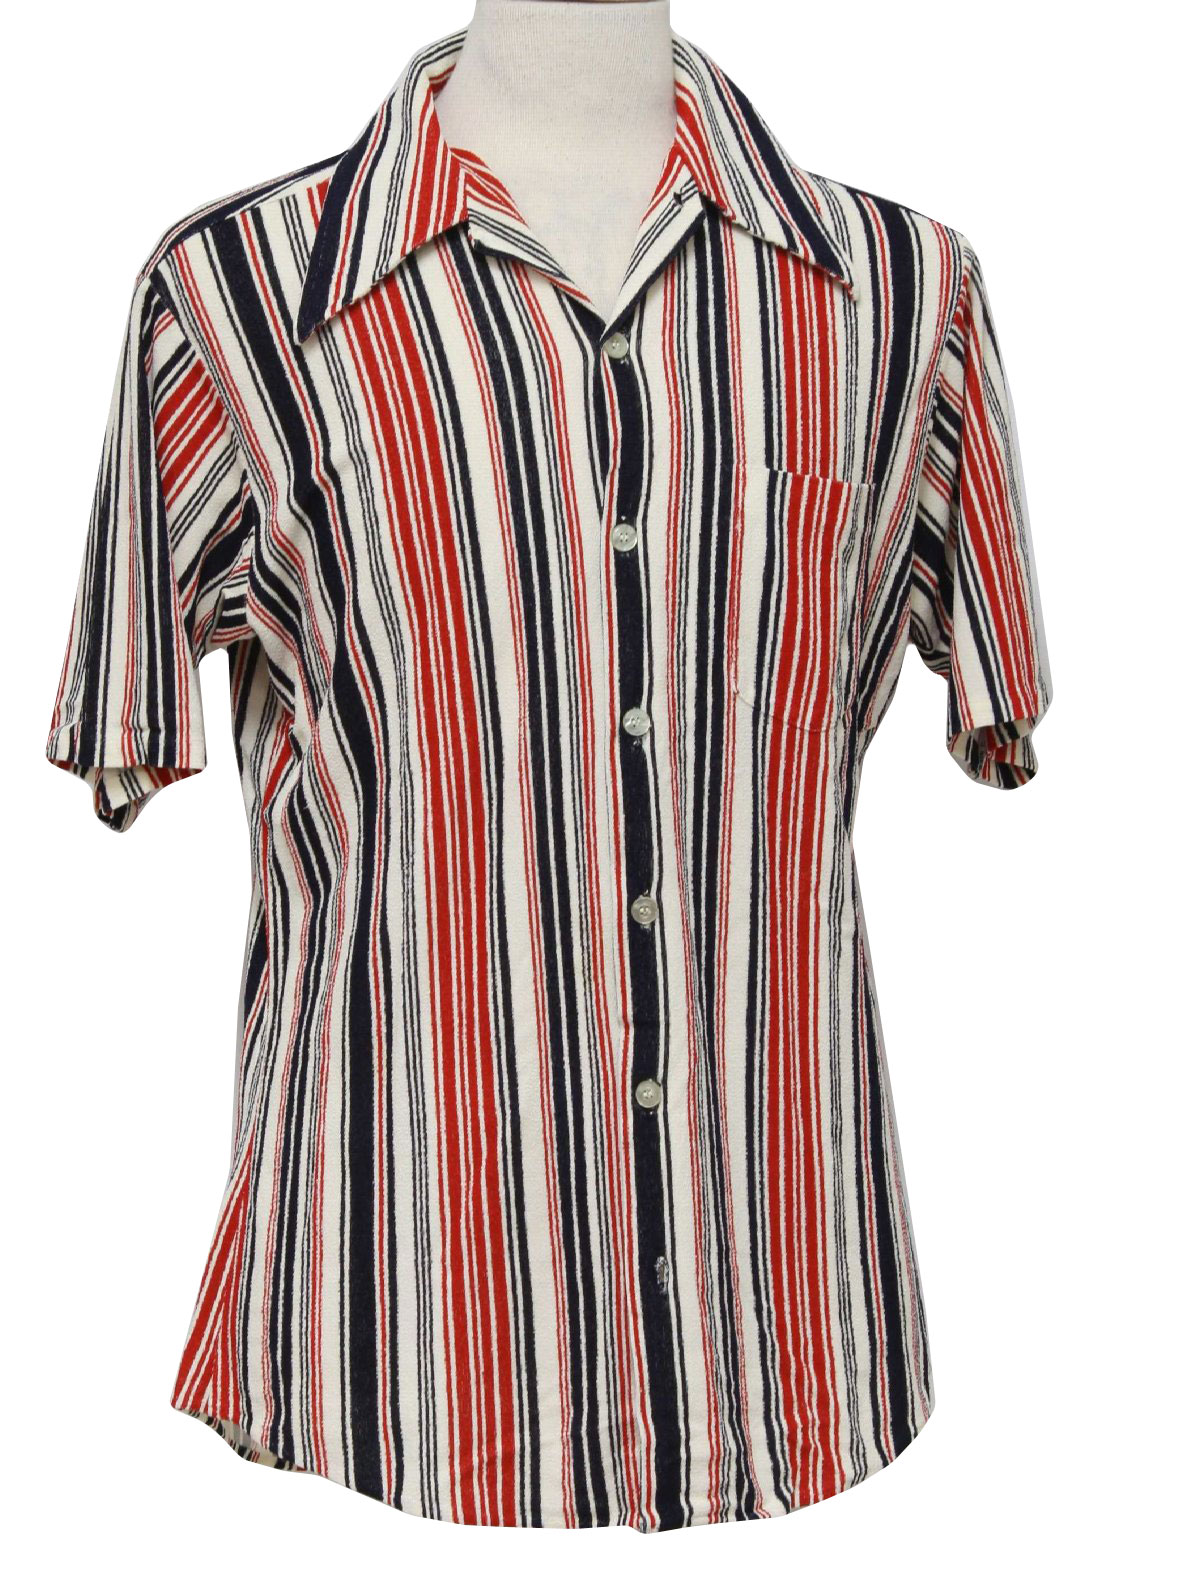 Retro 1970's Shirt (fabric label) : 70s -fabric label- Mens red, white ...